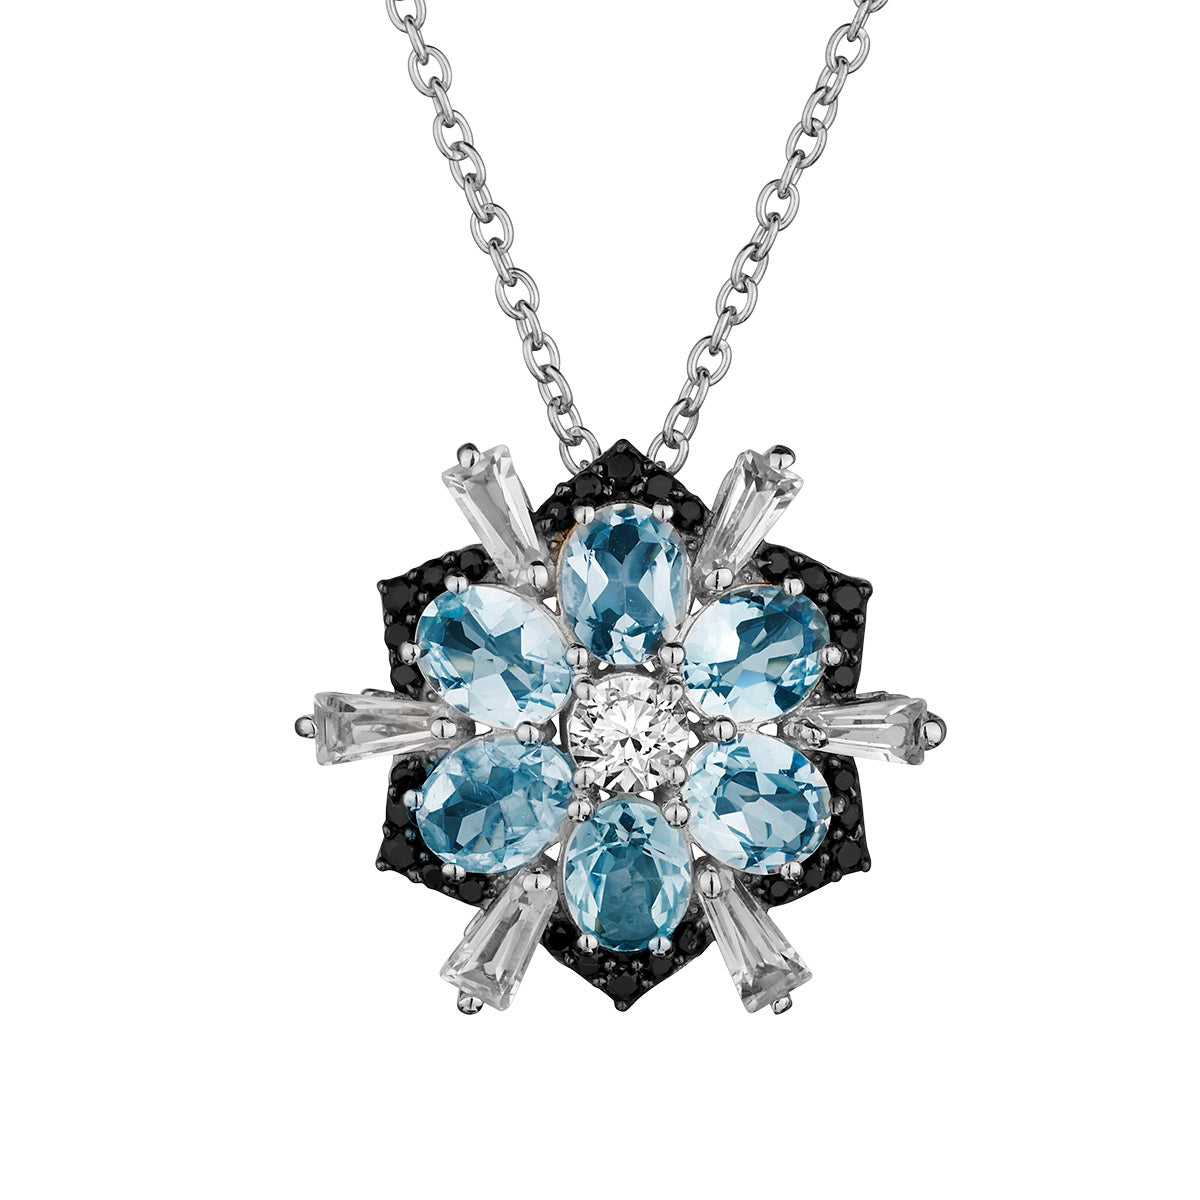 2.81 Carat Genuine Aquamarine & Zircon “Snowflake” Pendant, Sterling Silver.......................NOW